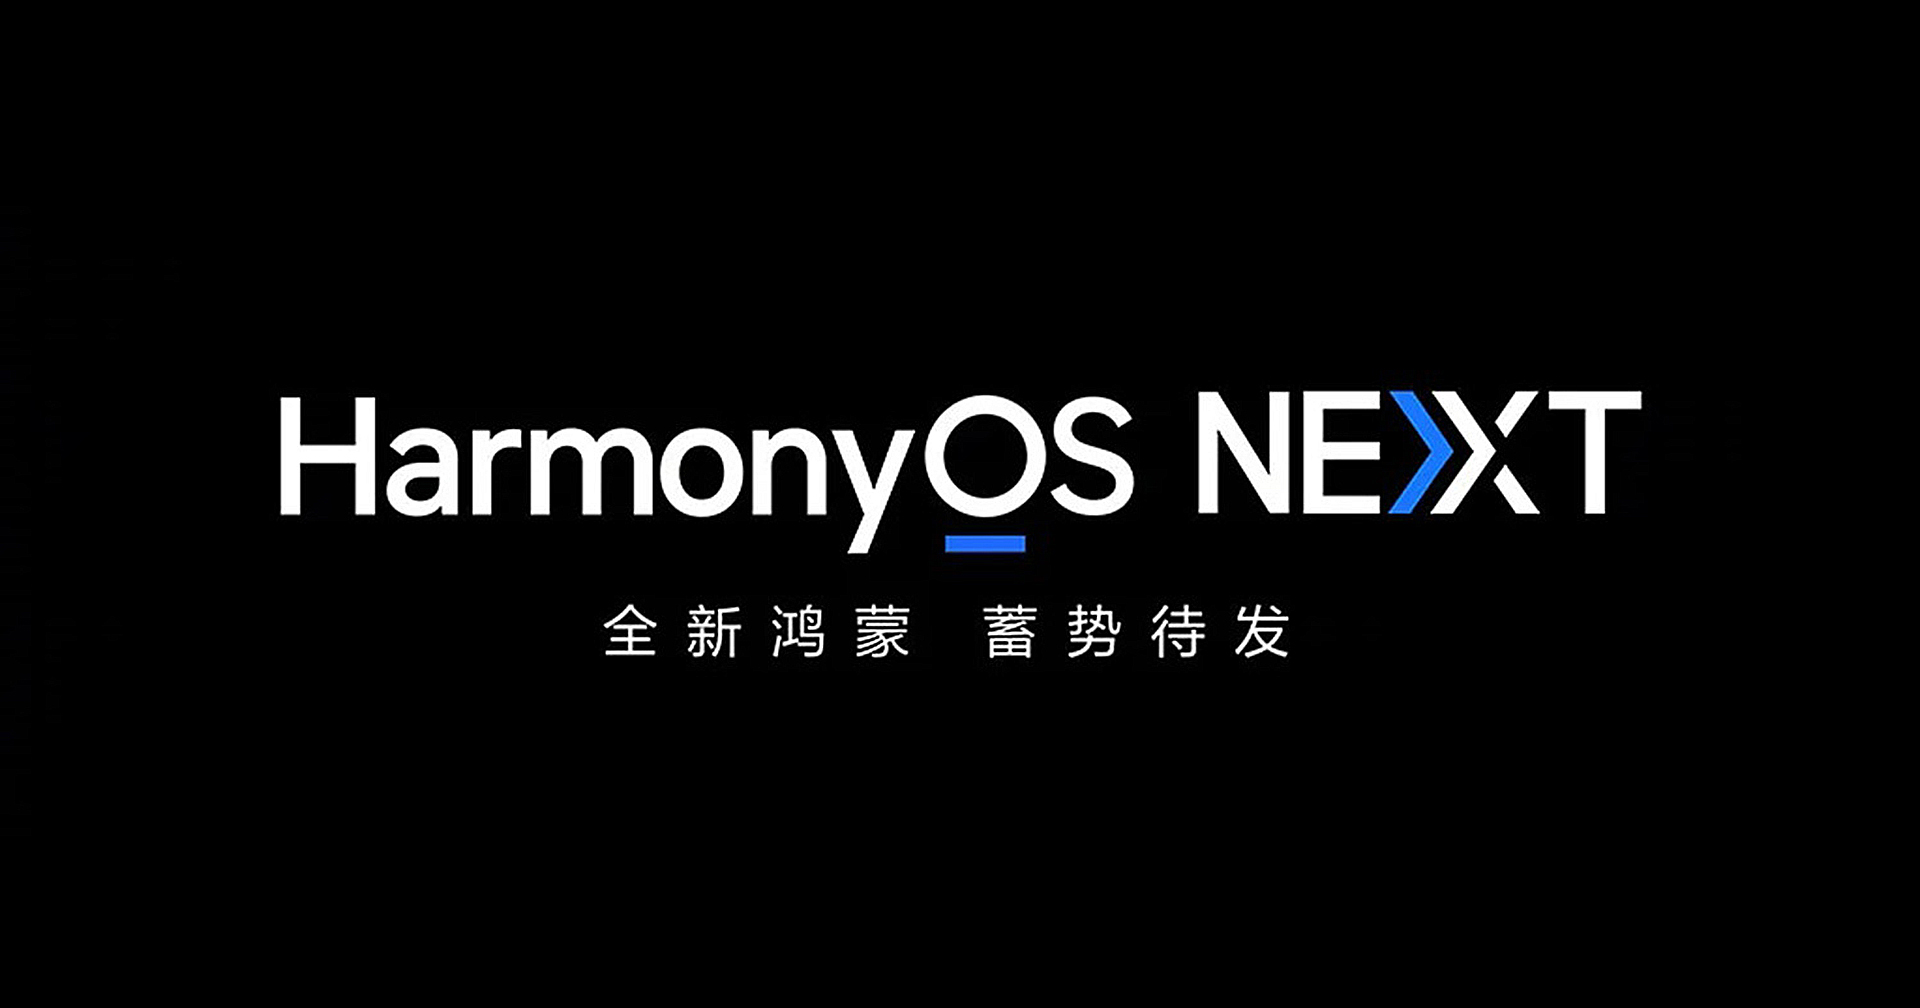 Huawei ปล่อย Harmony OS เวอร์ชัน Beta ตัวใหม่ ให้อุปกรณ์ว่า 20 รุ่น